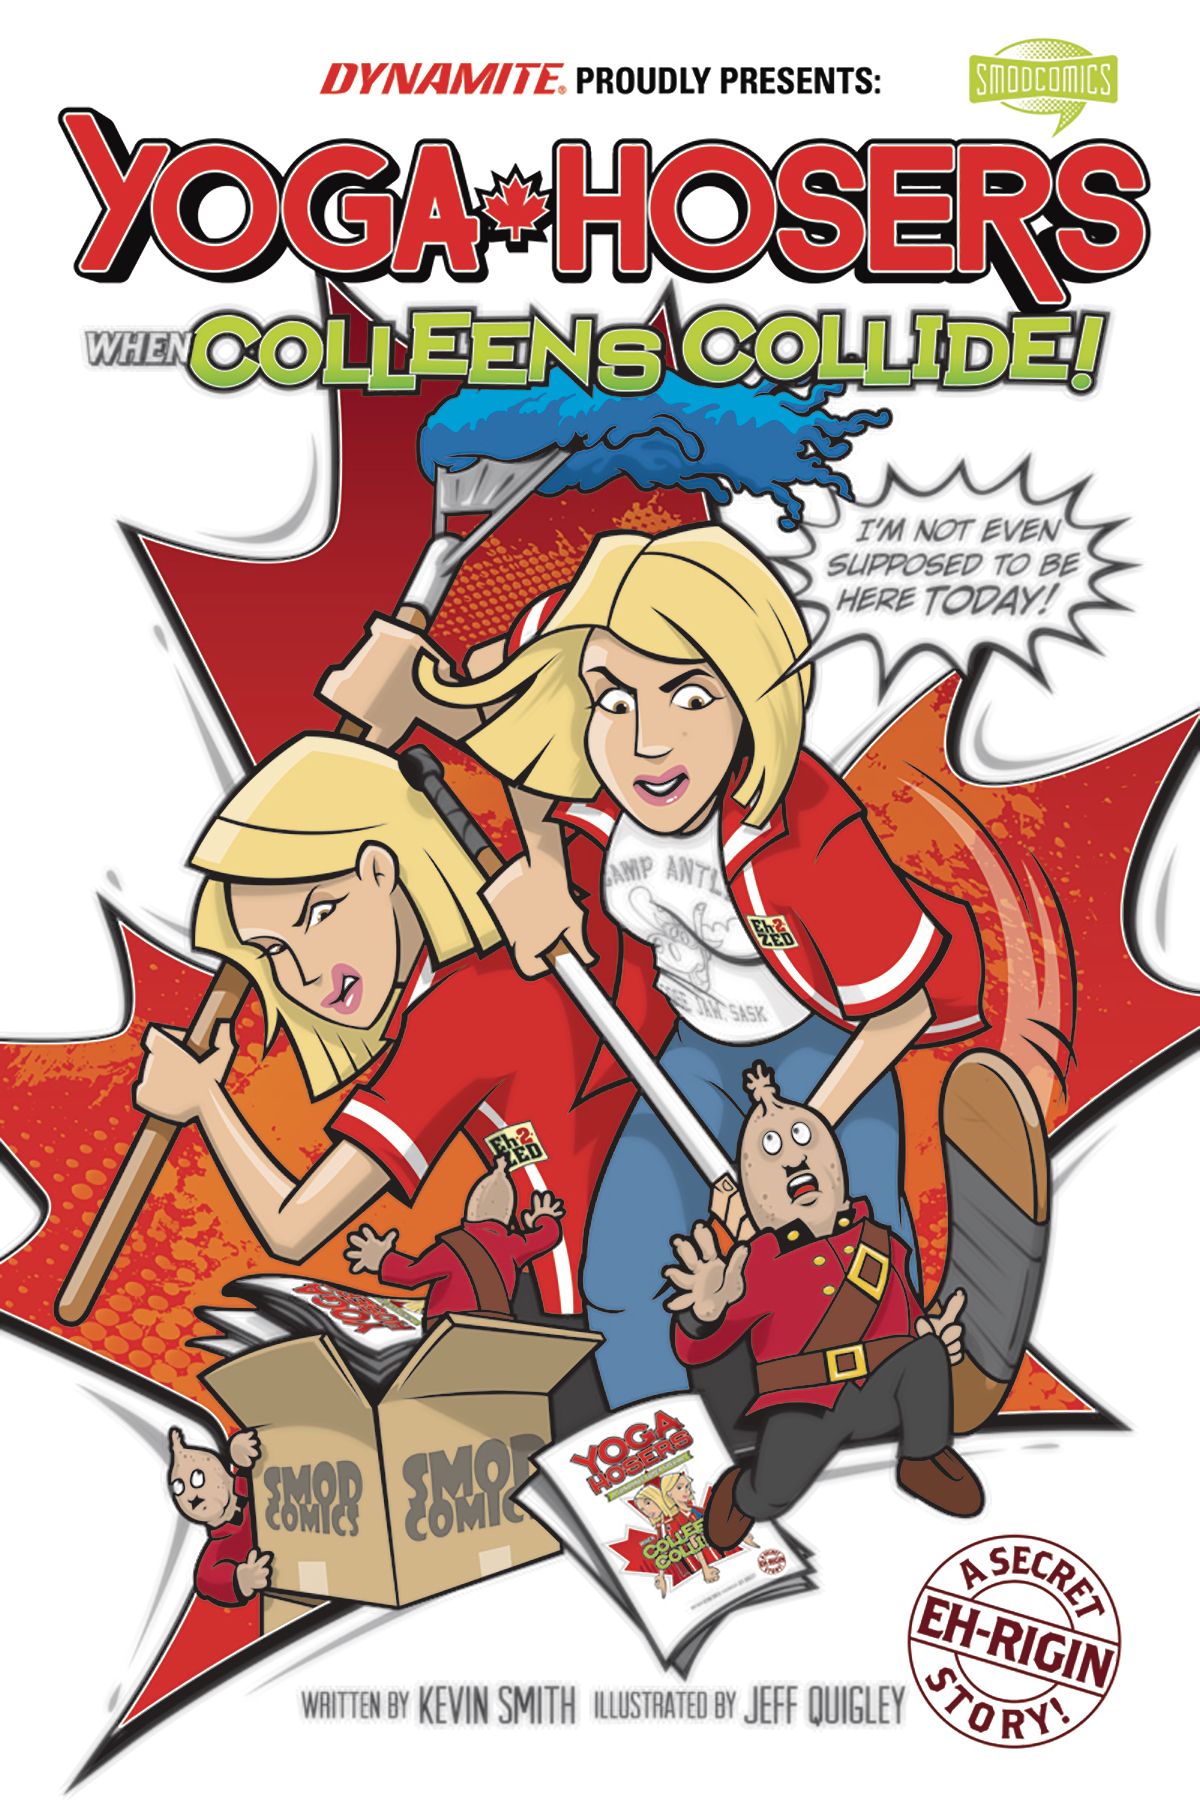 Yoga Hosers: When Colleens Collide! #nn Comic